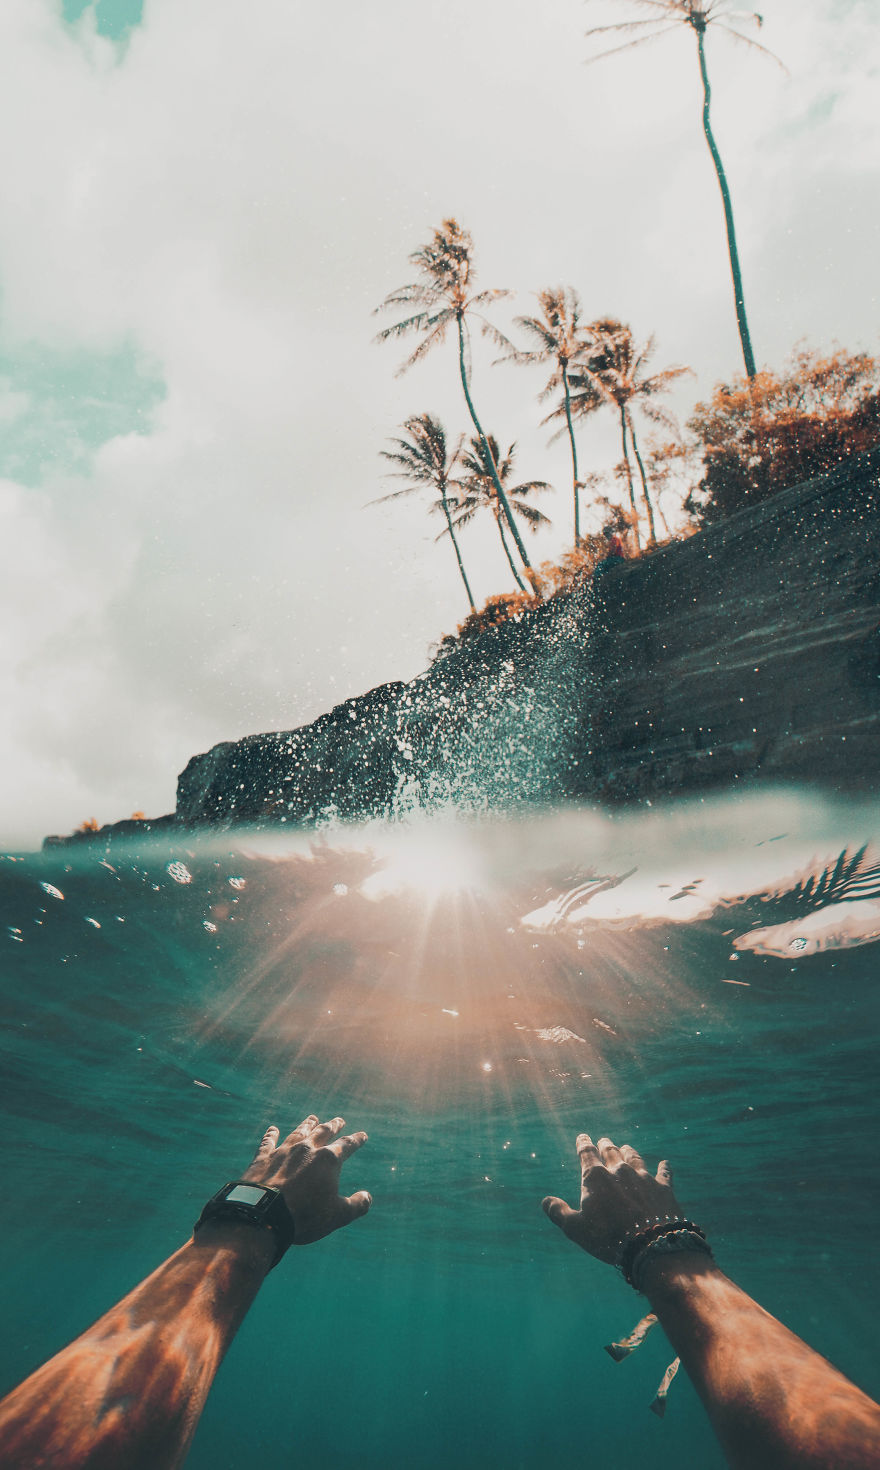 Palm Beach Digital Art/Swimming